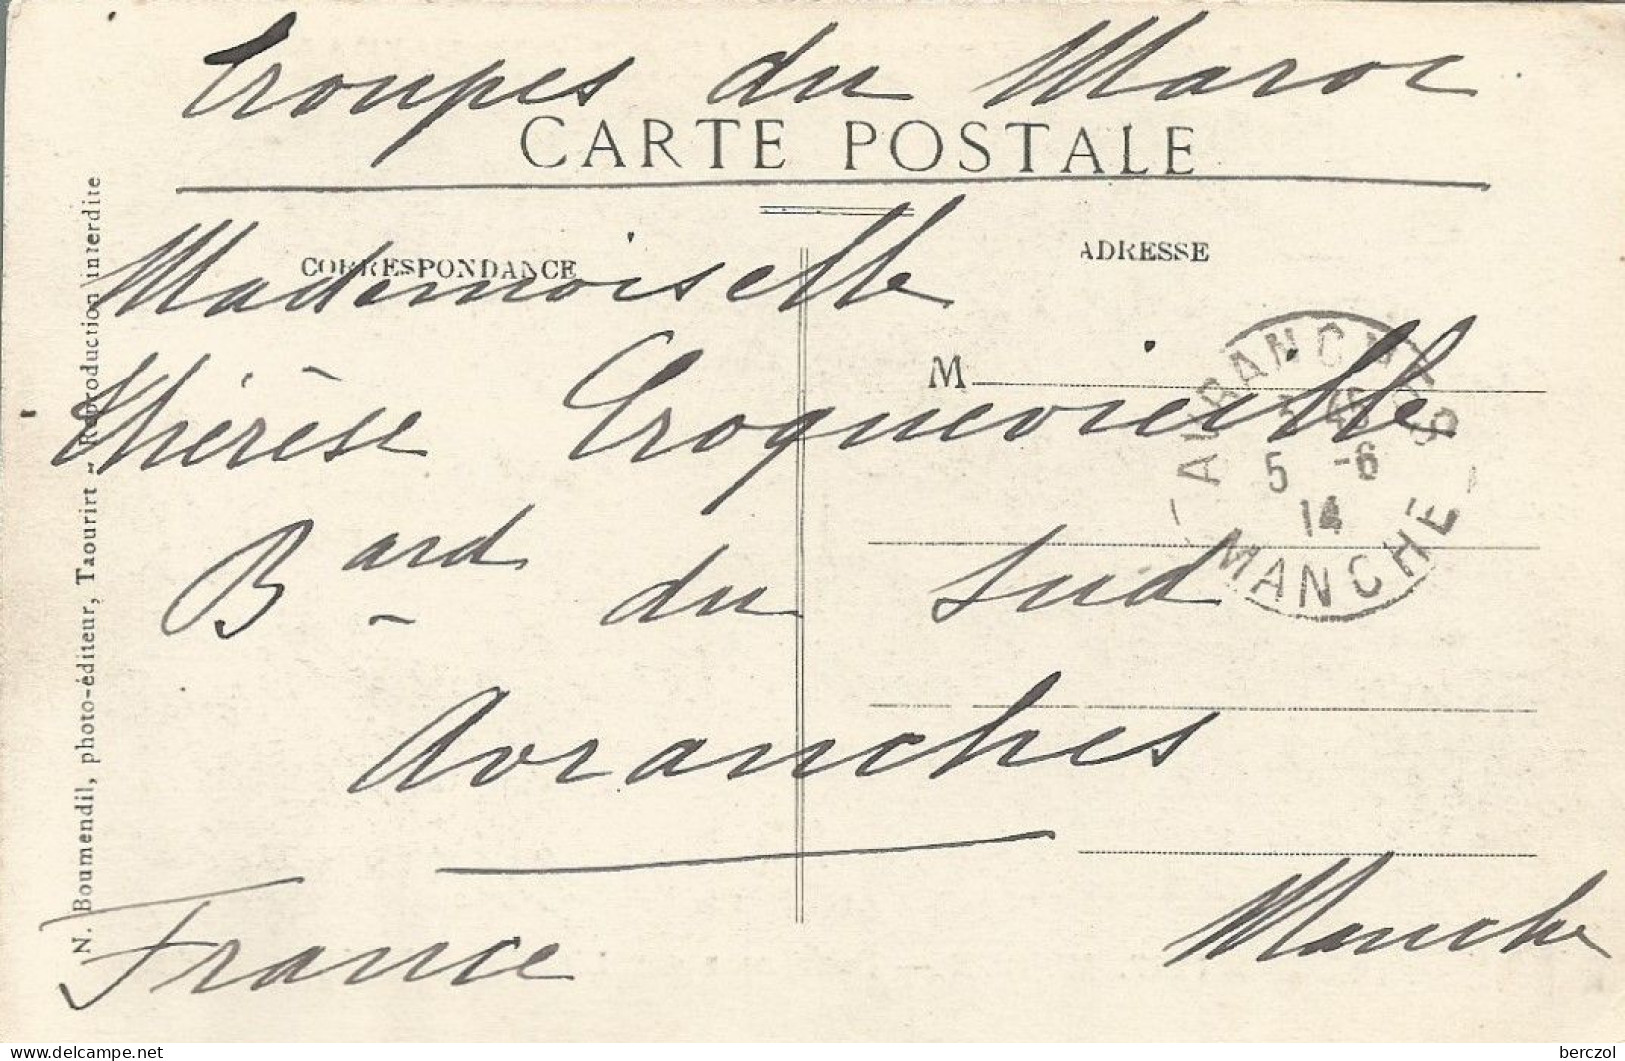 FRANCE ANNEE 1914 CPA INFIRMERIE ANBULANCE DE KASBAT M'COUN 5/6/14 FRANCHISE MILITAIRE TB - Red Cross